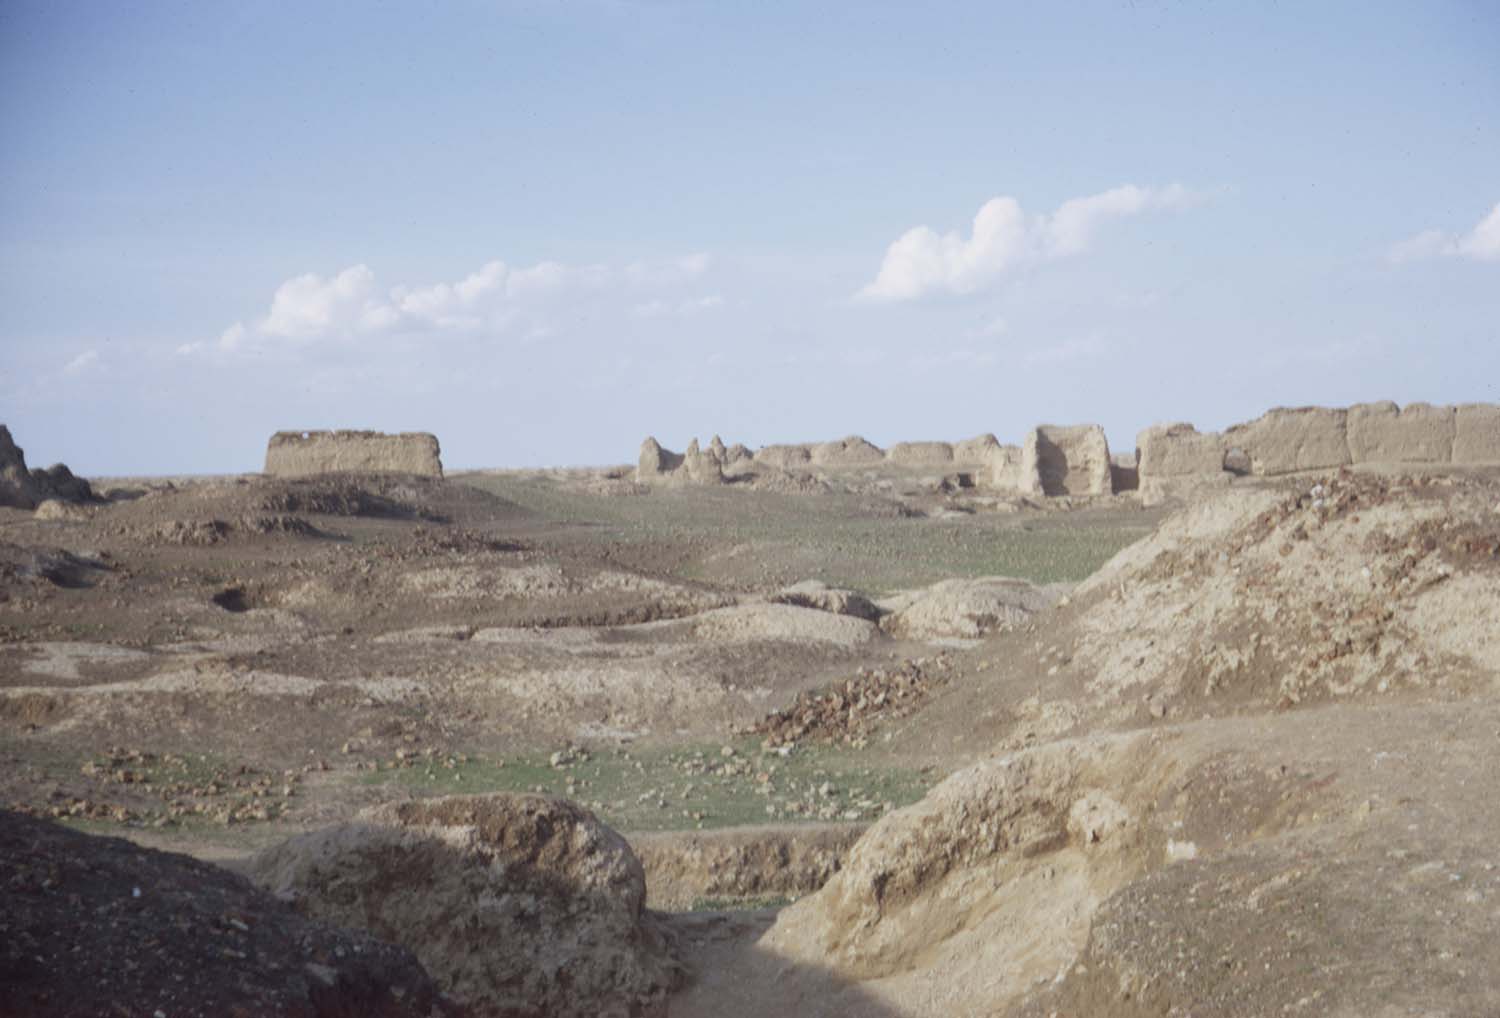 Dar al-Khilafa (Samarra) - Distant view of ruins at Samarra, possibly part of the Dar al-Khilafa (?).